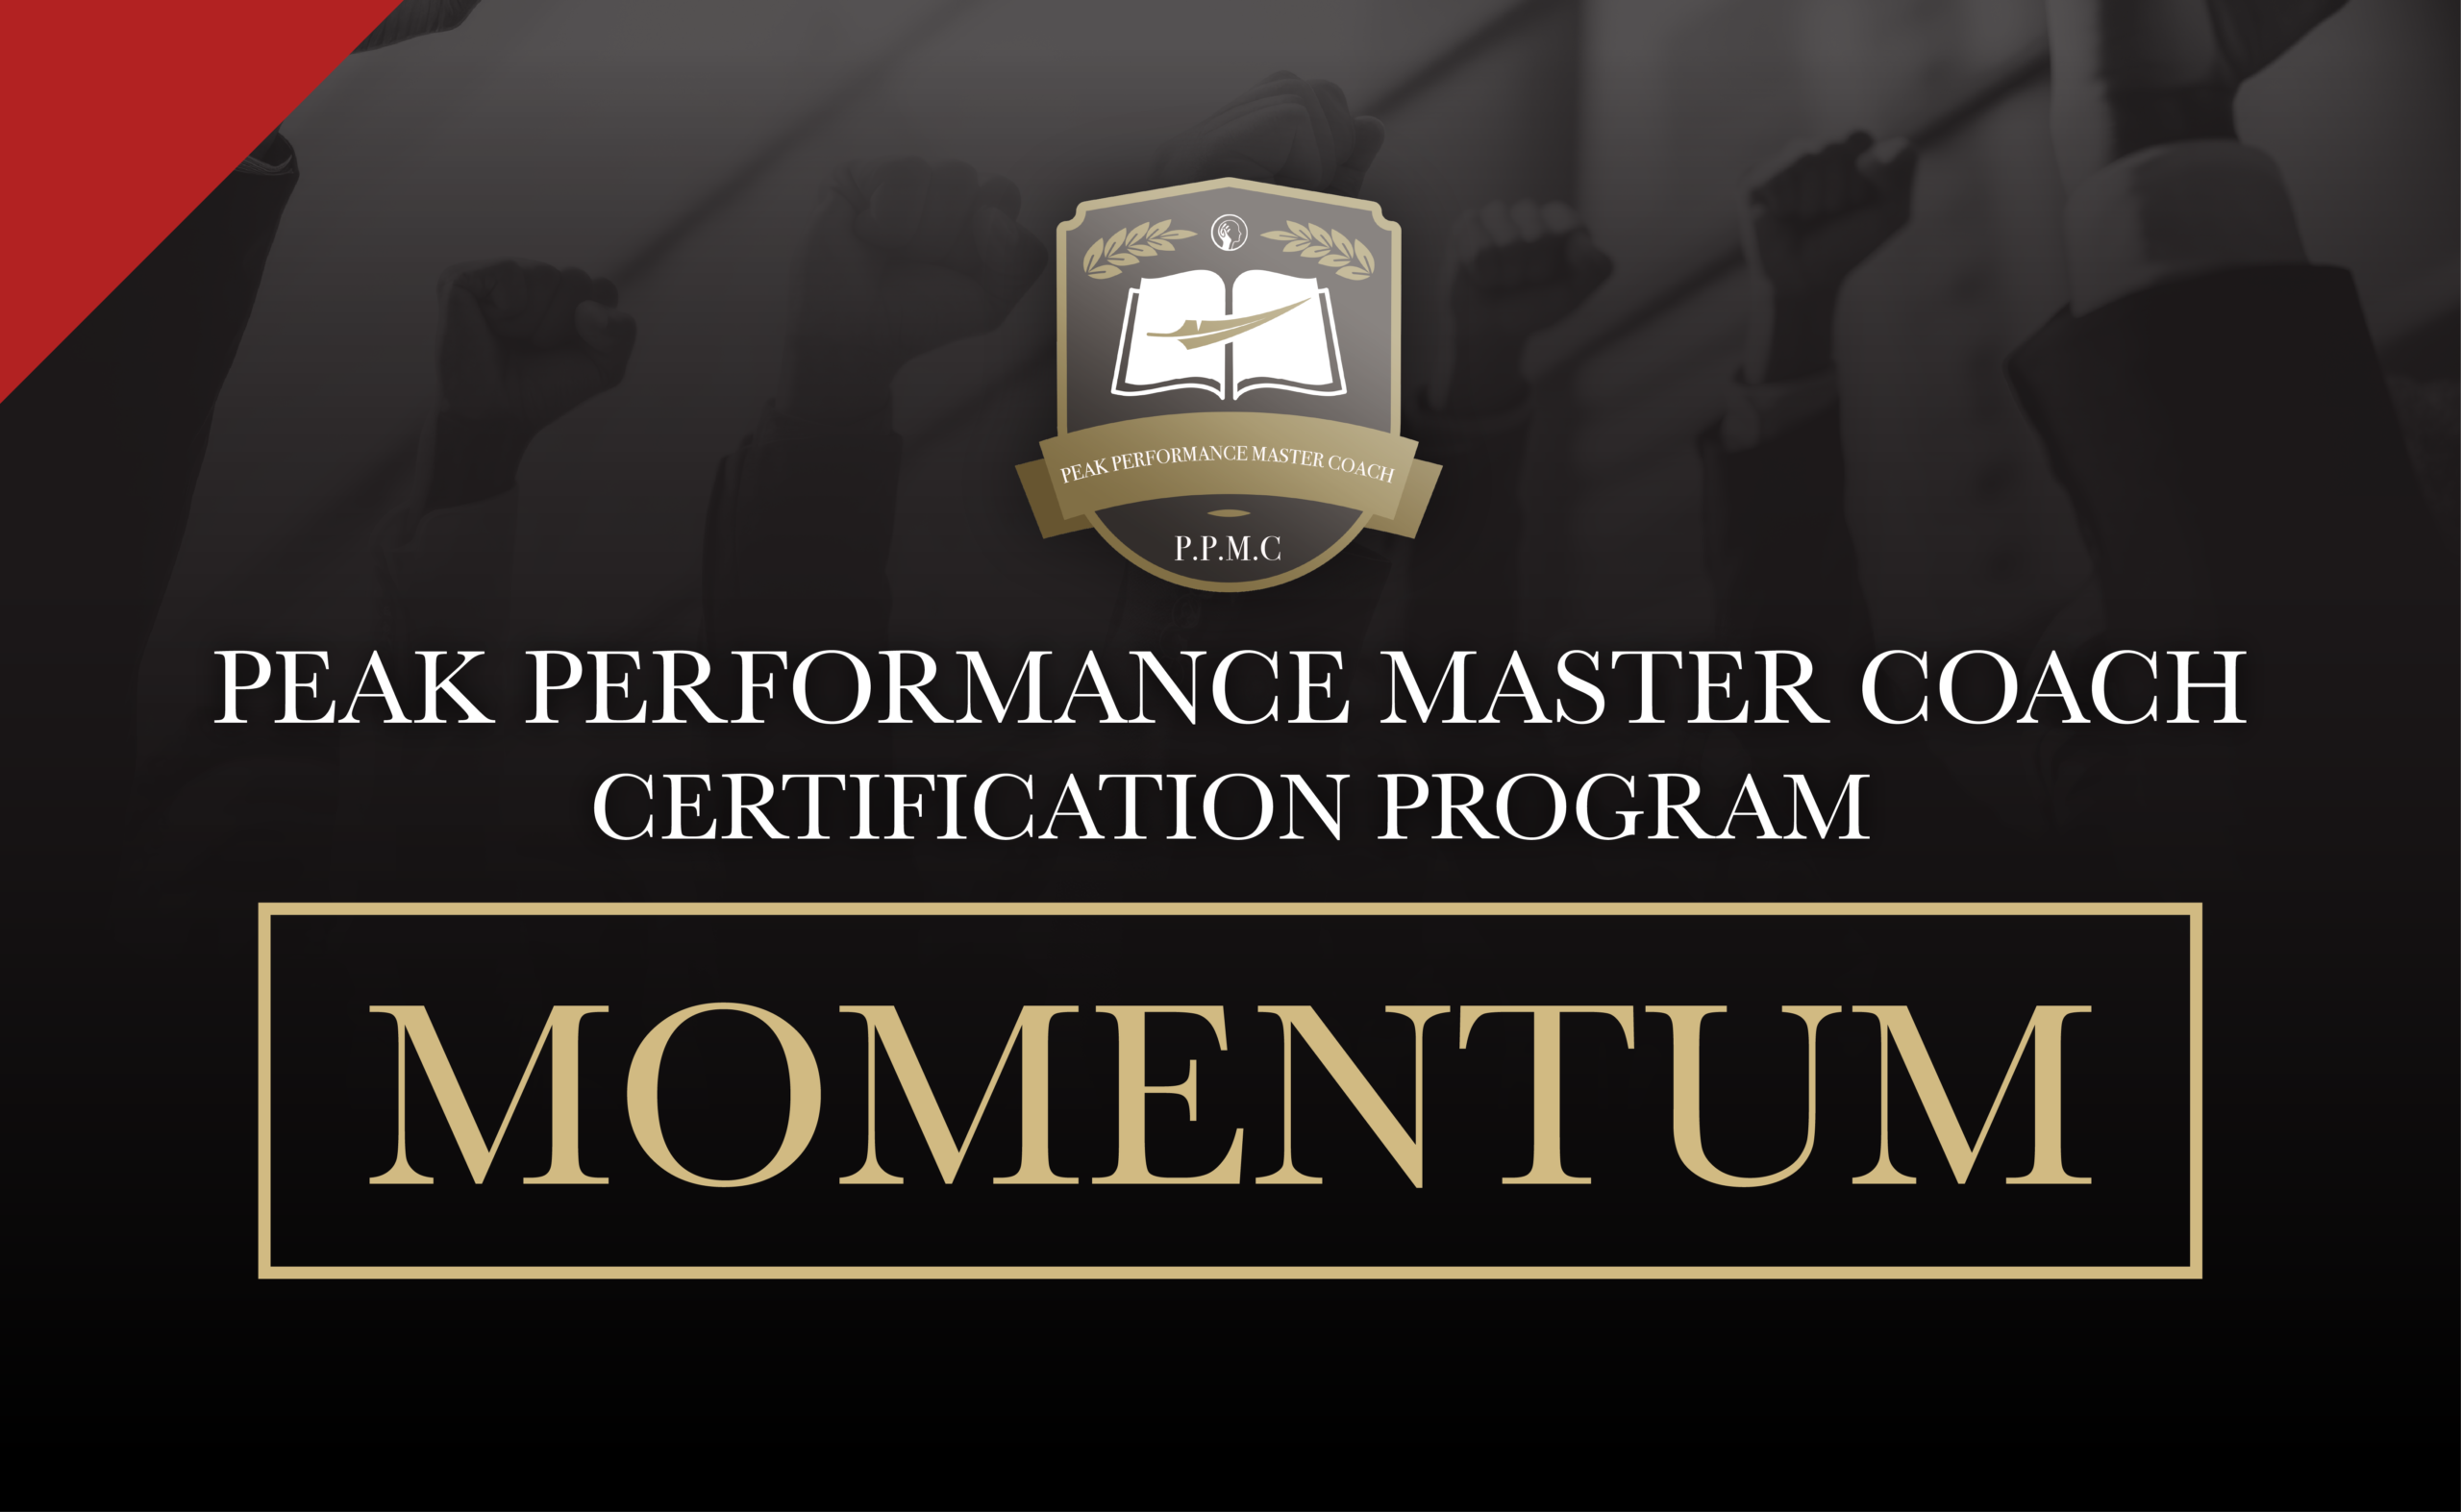 Peak Performance Master Coach – MOMENTUM